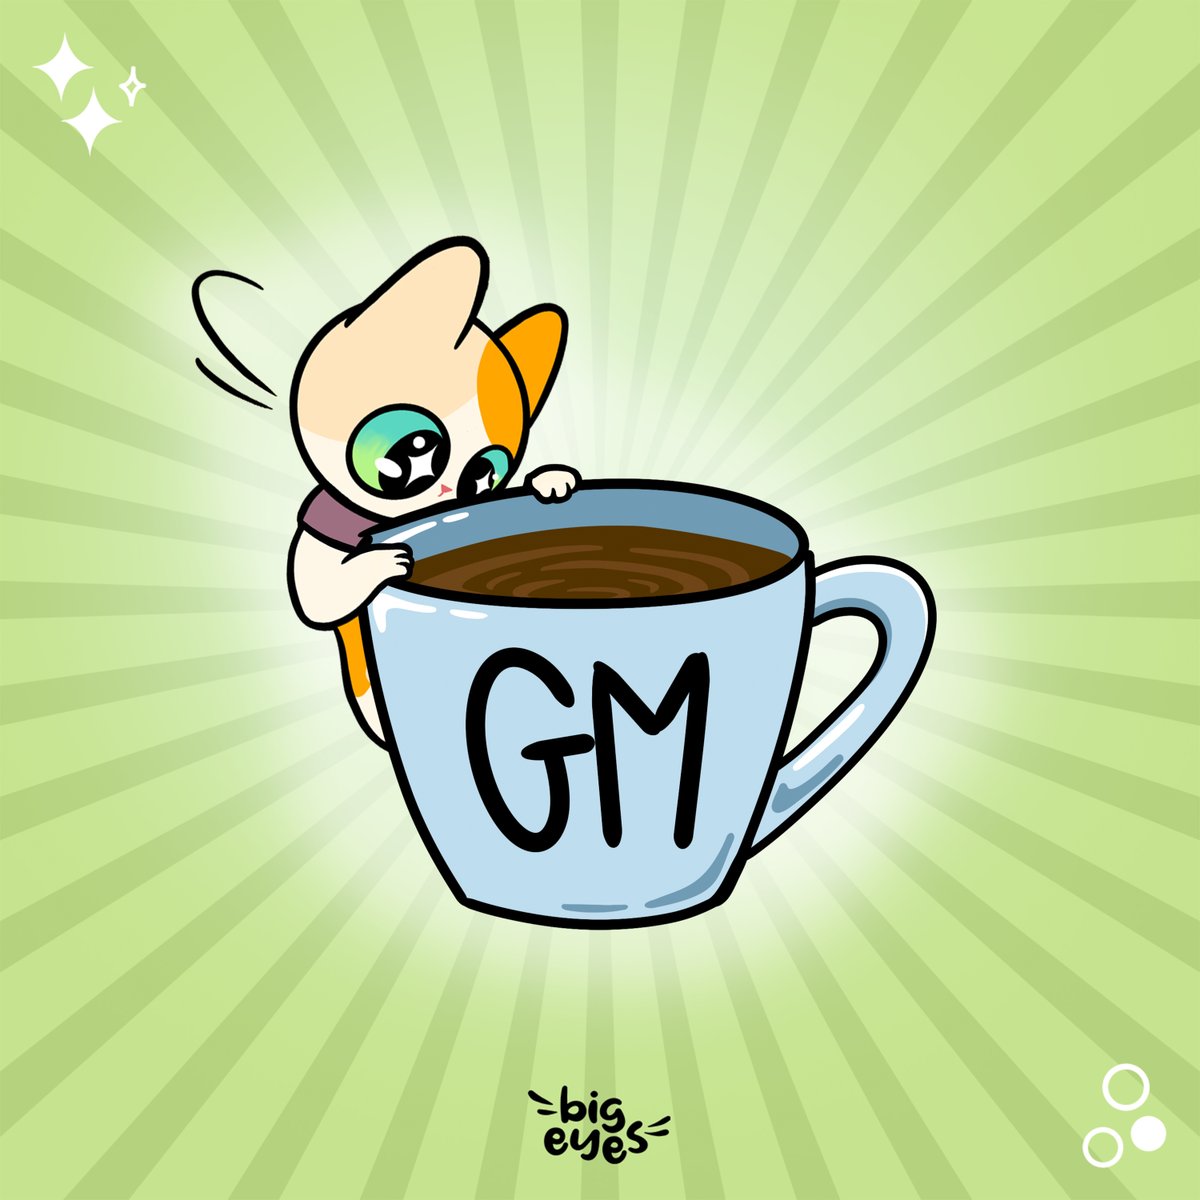 Good Morning #CatCrew!😻

Have a happy Cat-urday!